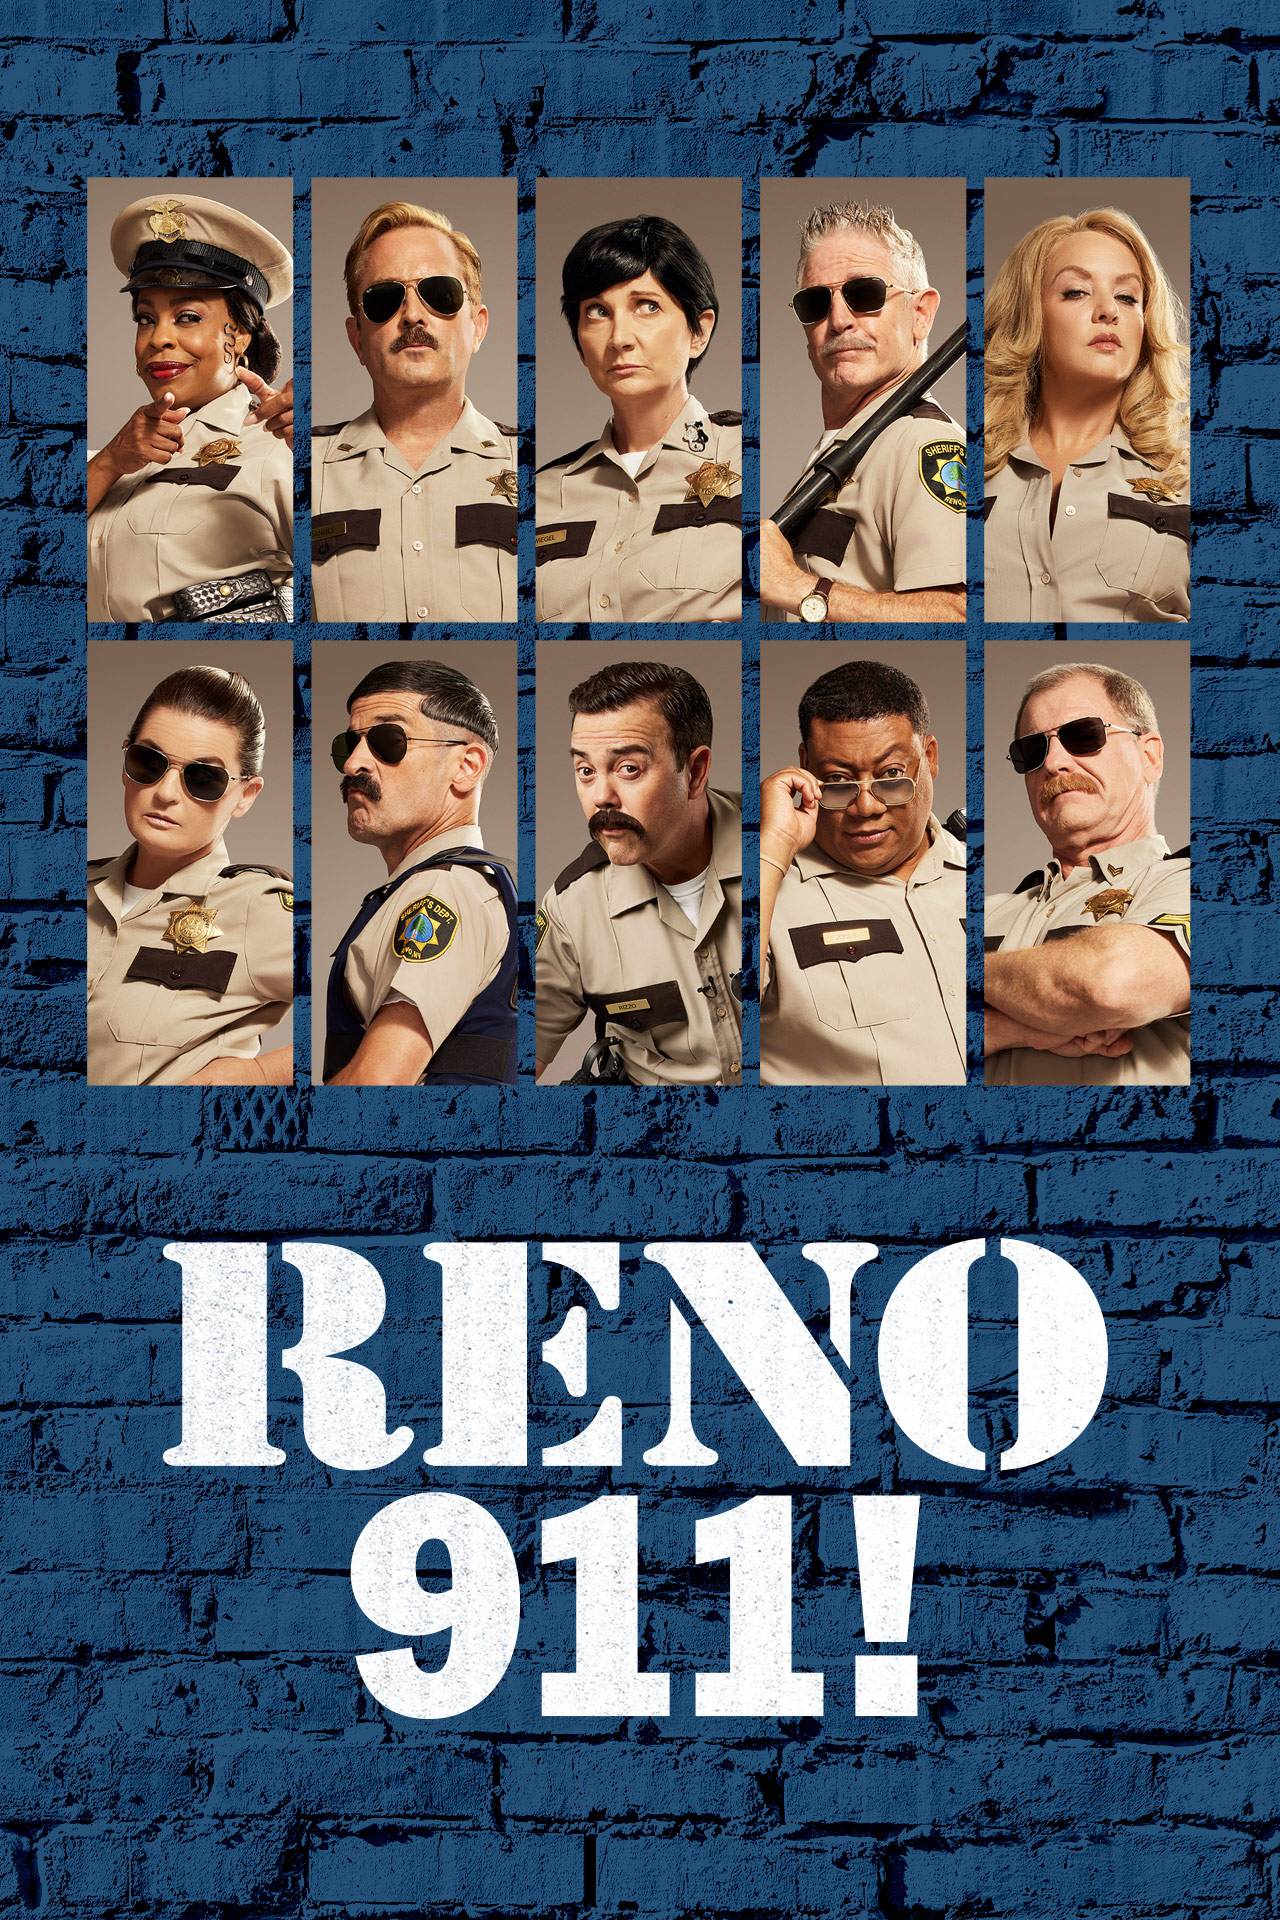 Assistir Reno 911!: Miami - ver séries online